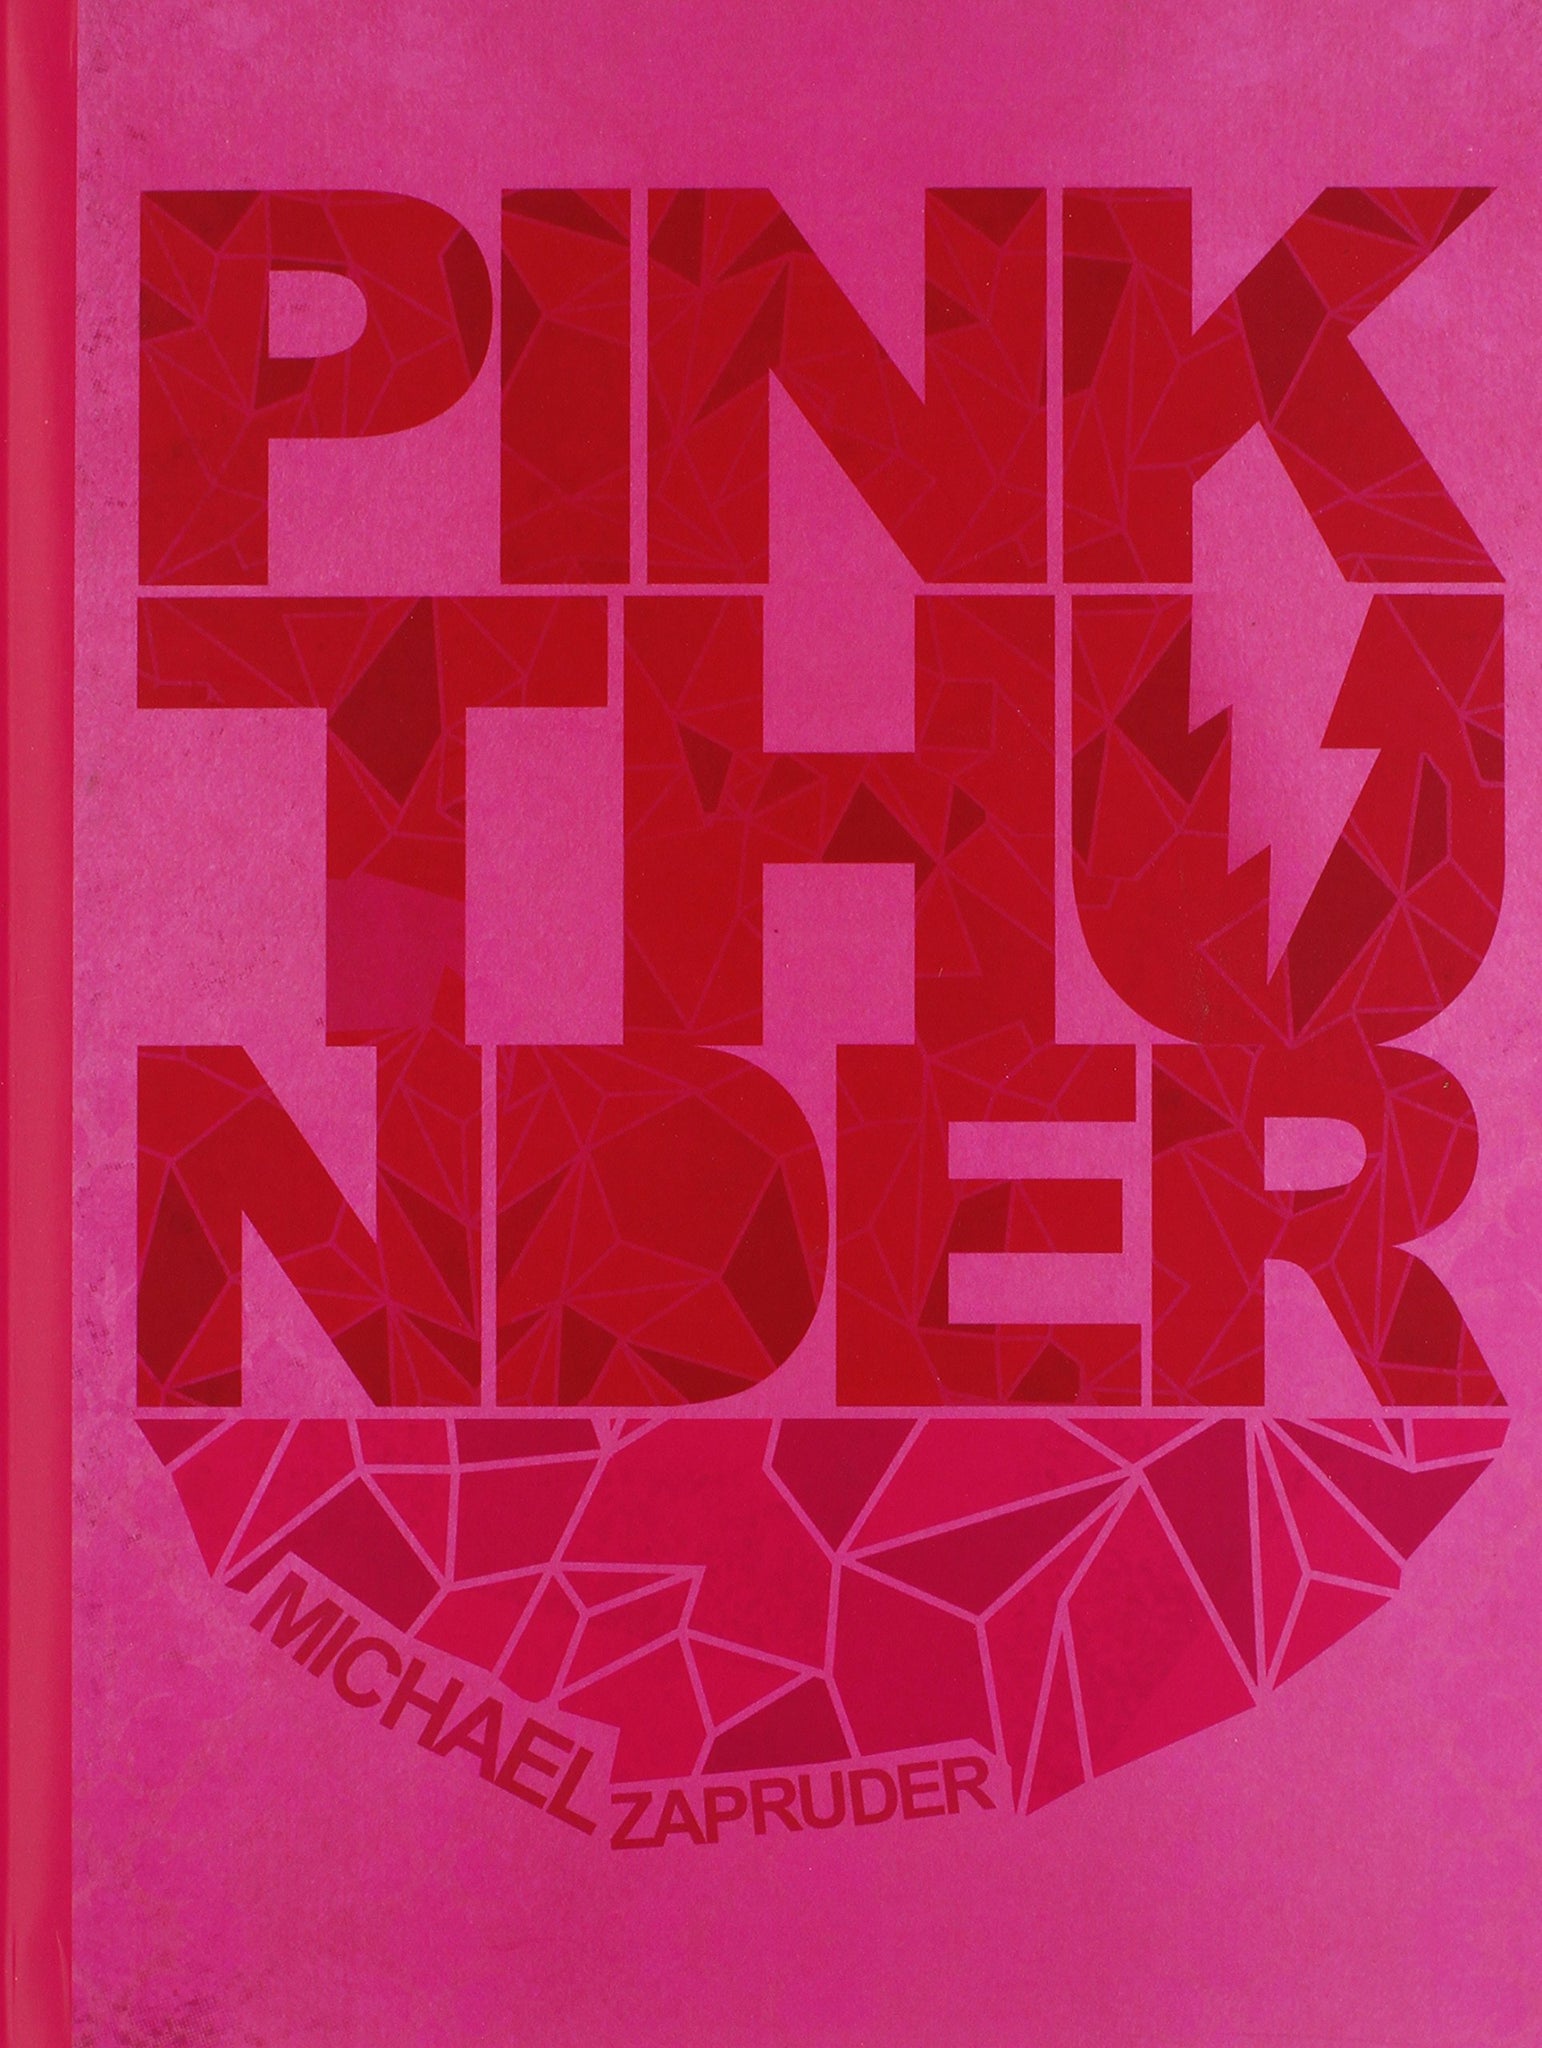 Pink Thunder